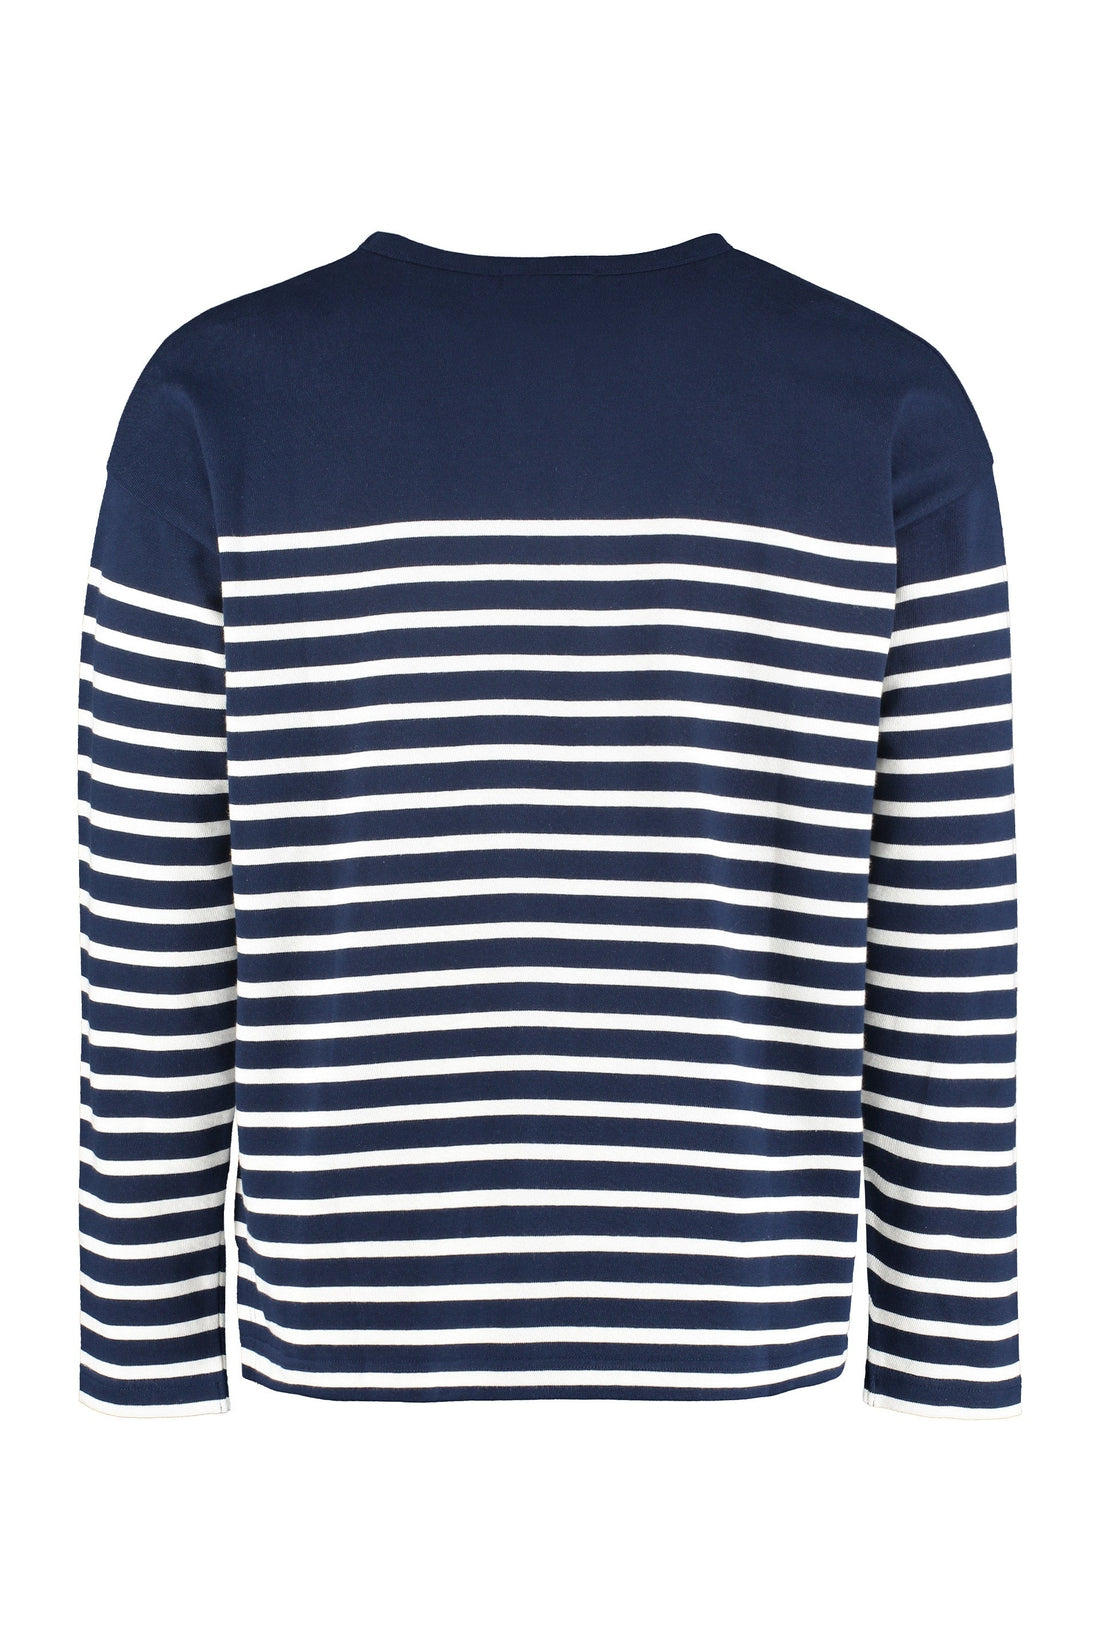 Maison Labiche-OUTLET-SALE-Striped crew-neck sweater-ARCHIVIST